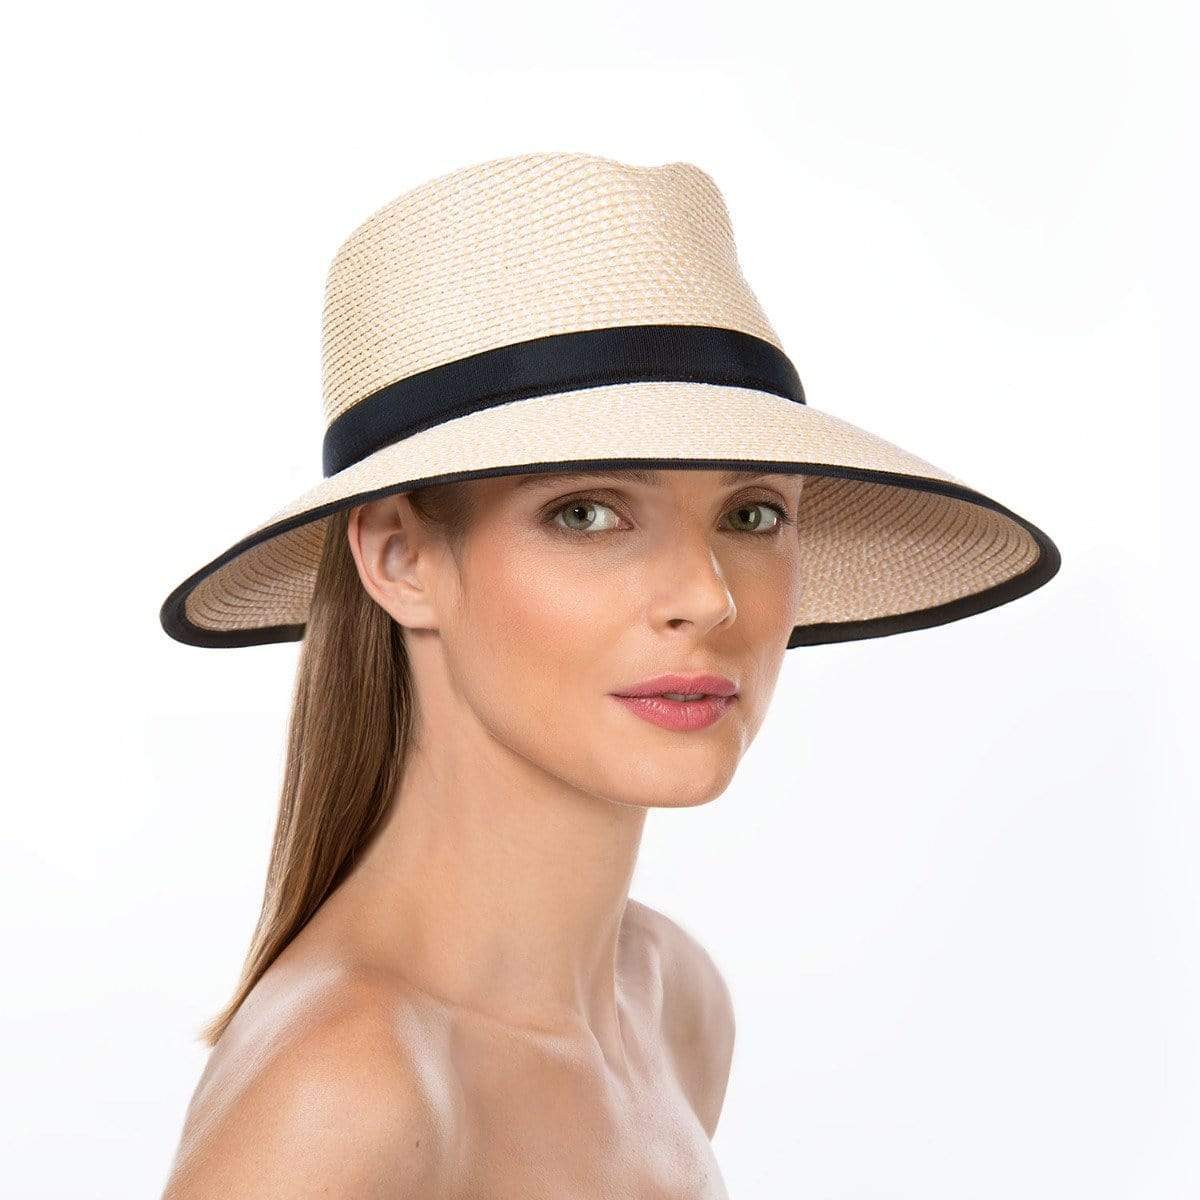 eric-javits-women-hats-sun-crest-visor-hat-bone-mix-28205920387230_1800x1800_1bf28fc1-a224-4b80-990c-22b422032e77.jpg